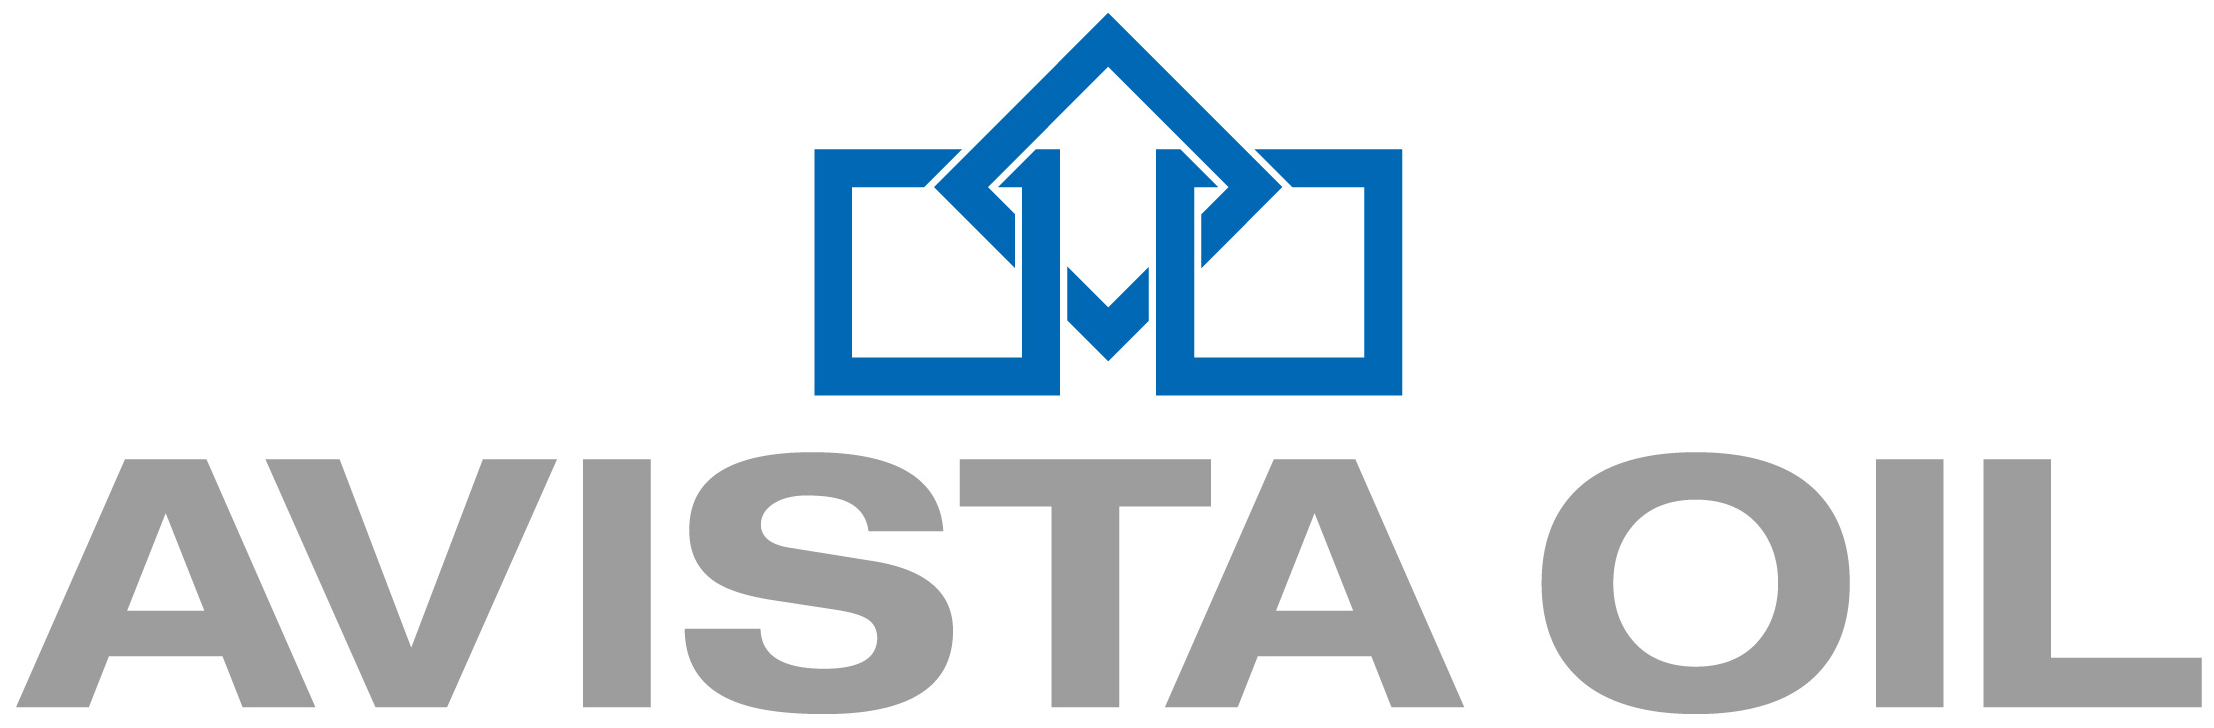 Производитель AVISTA логотип